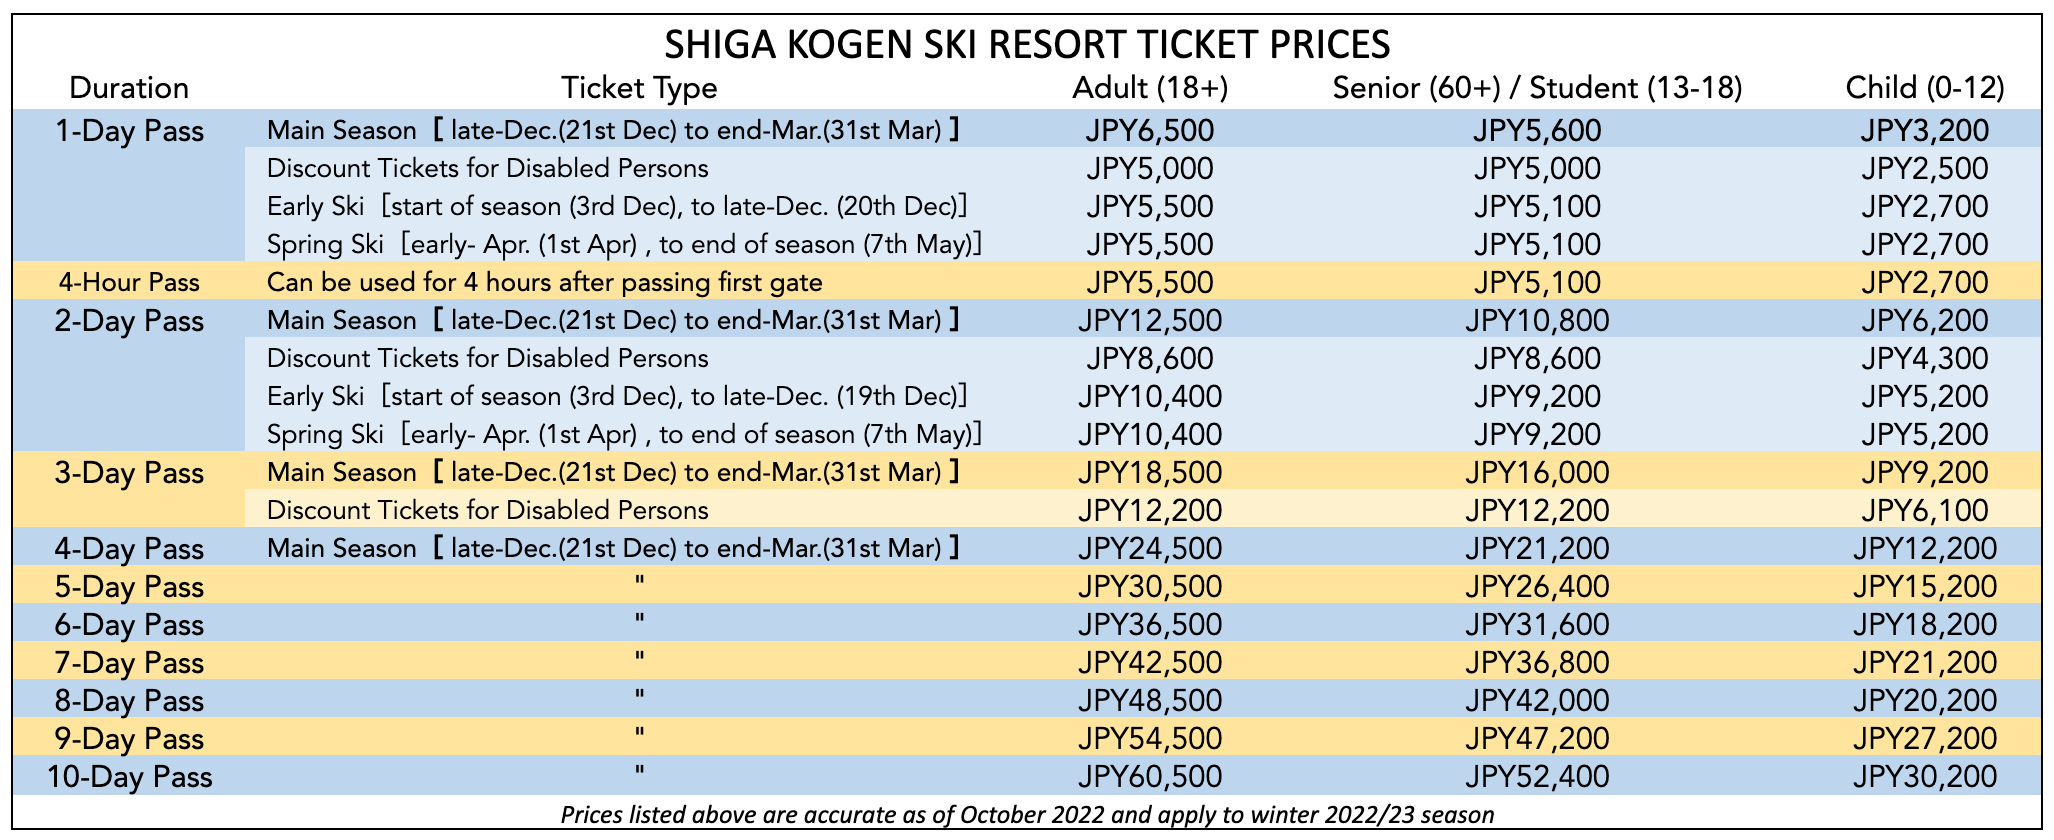 shiga-kogen-ticket-prices-202021